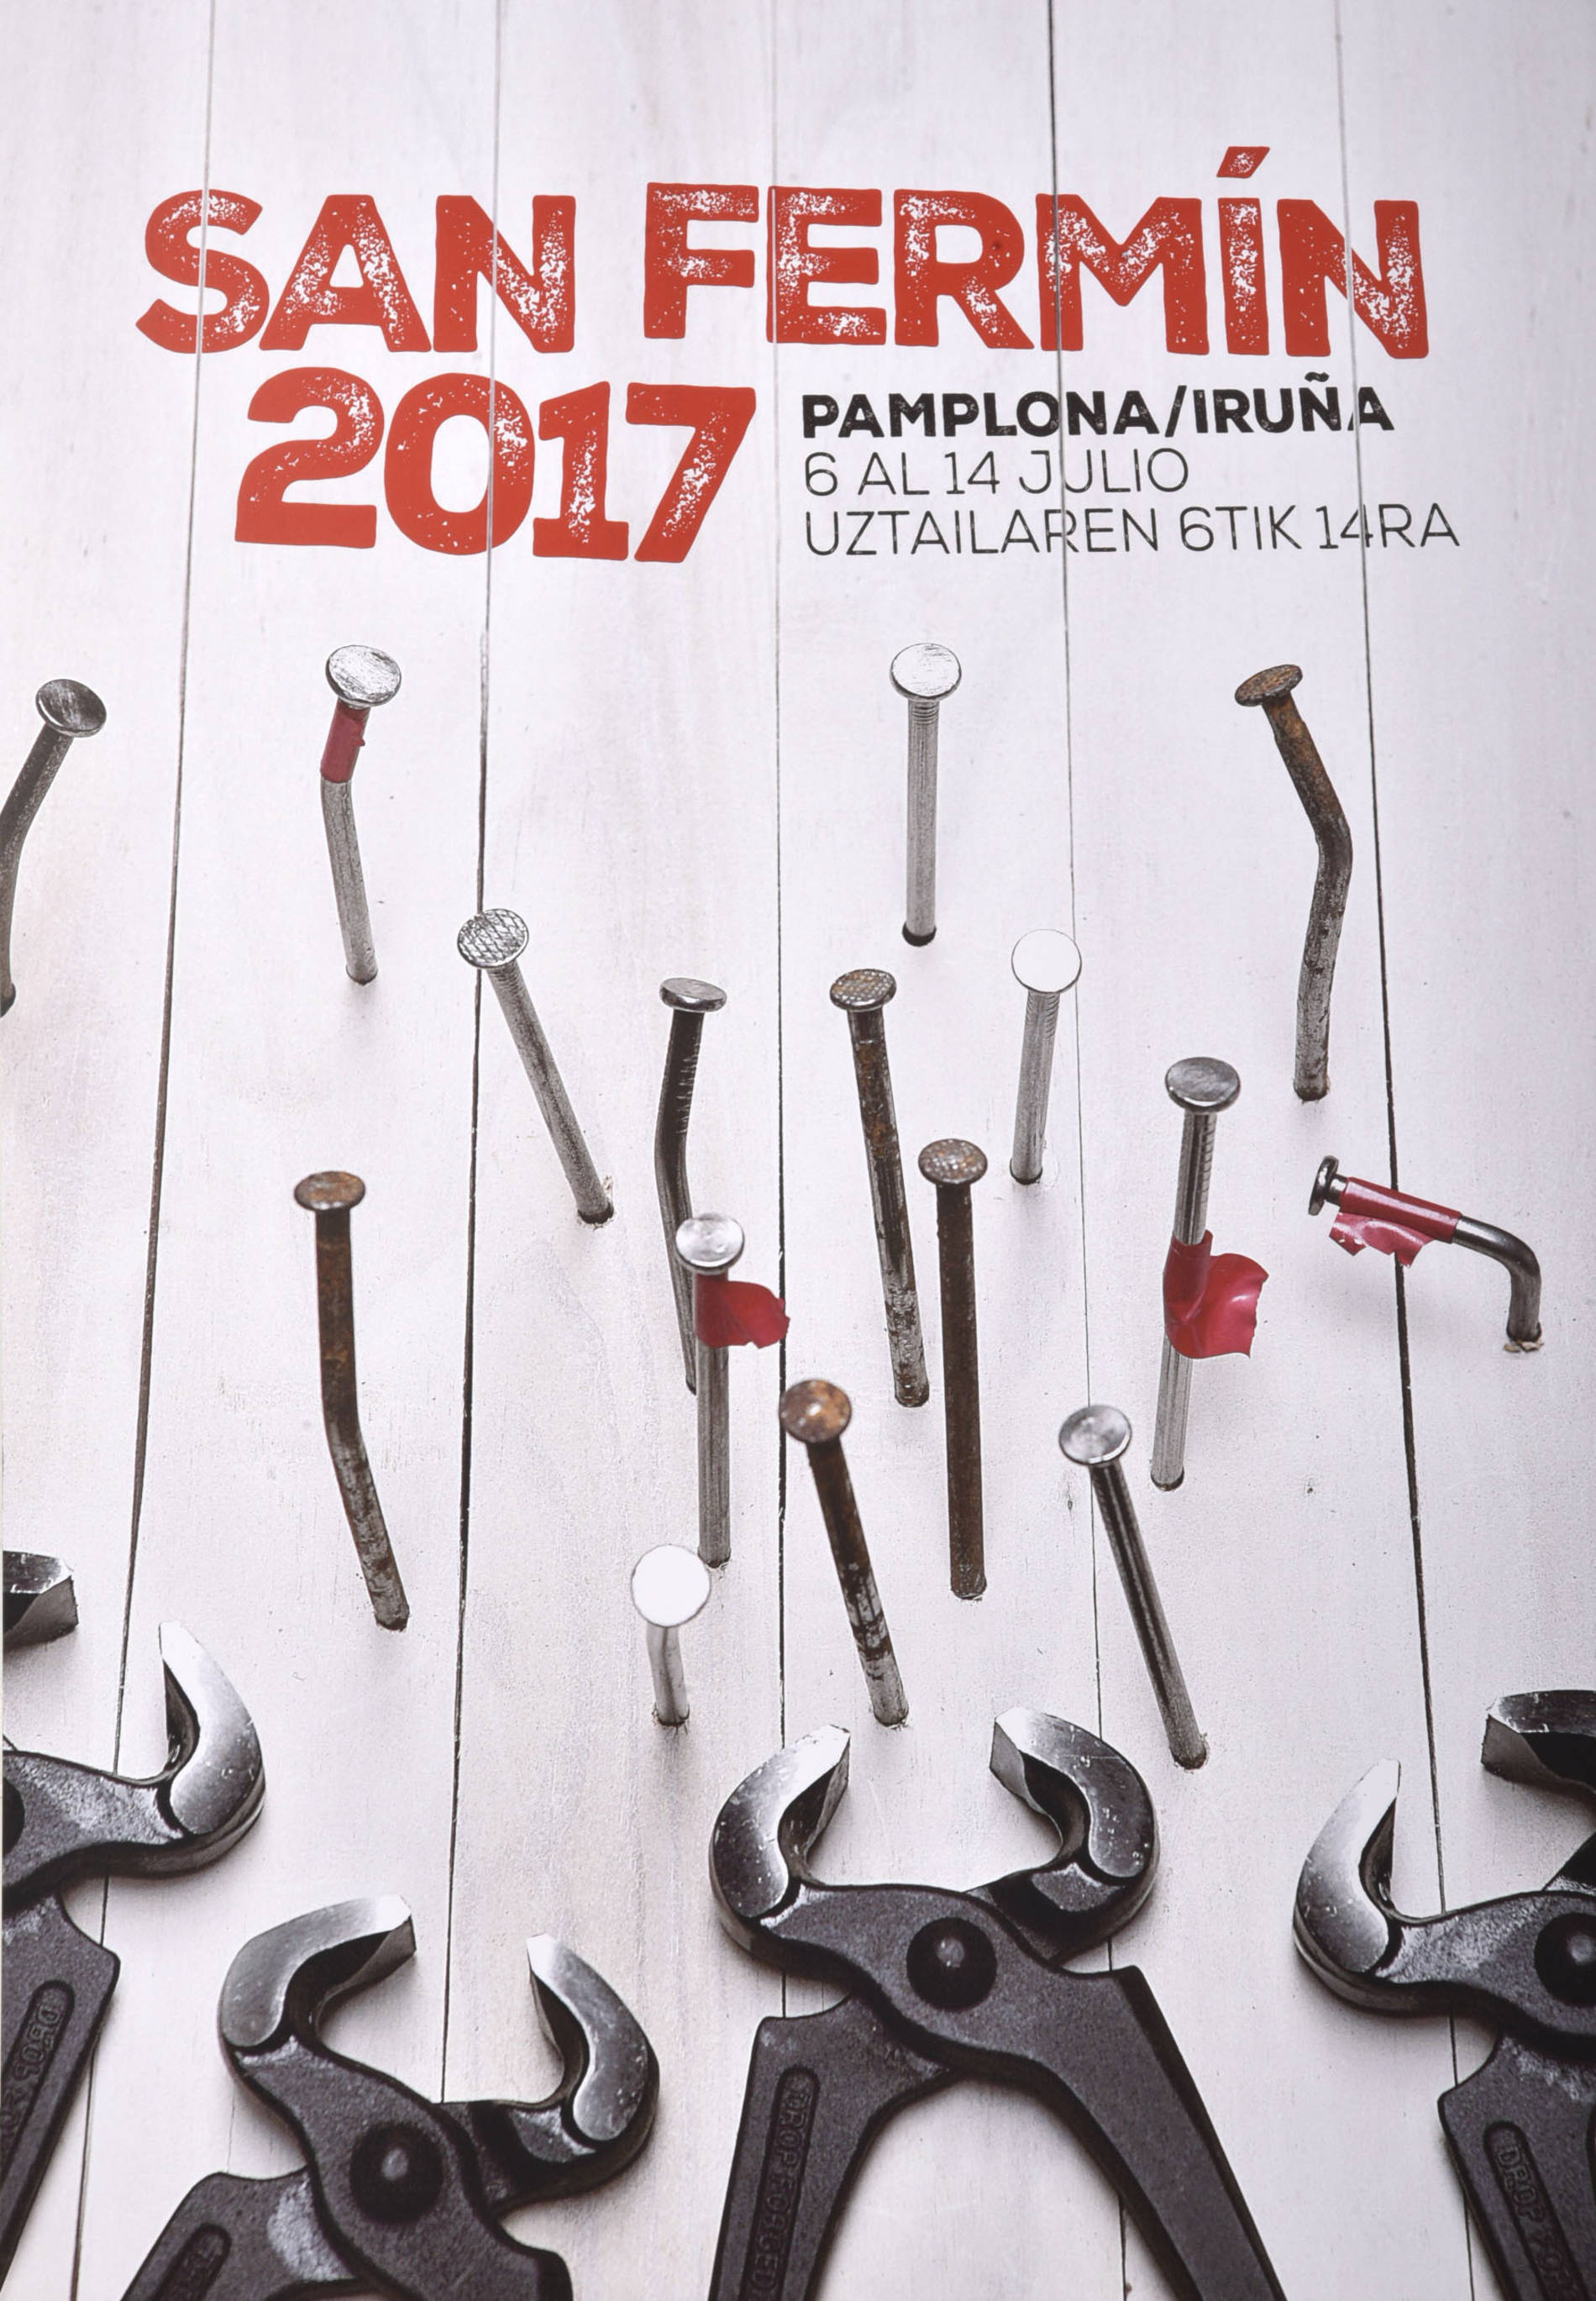 Carteles finalistas de San Fermín 2017 (6/9) - Fotos de los ocho finalistas del concurso de carteles San Fermín 2017 - Pamplona - null